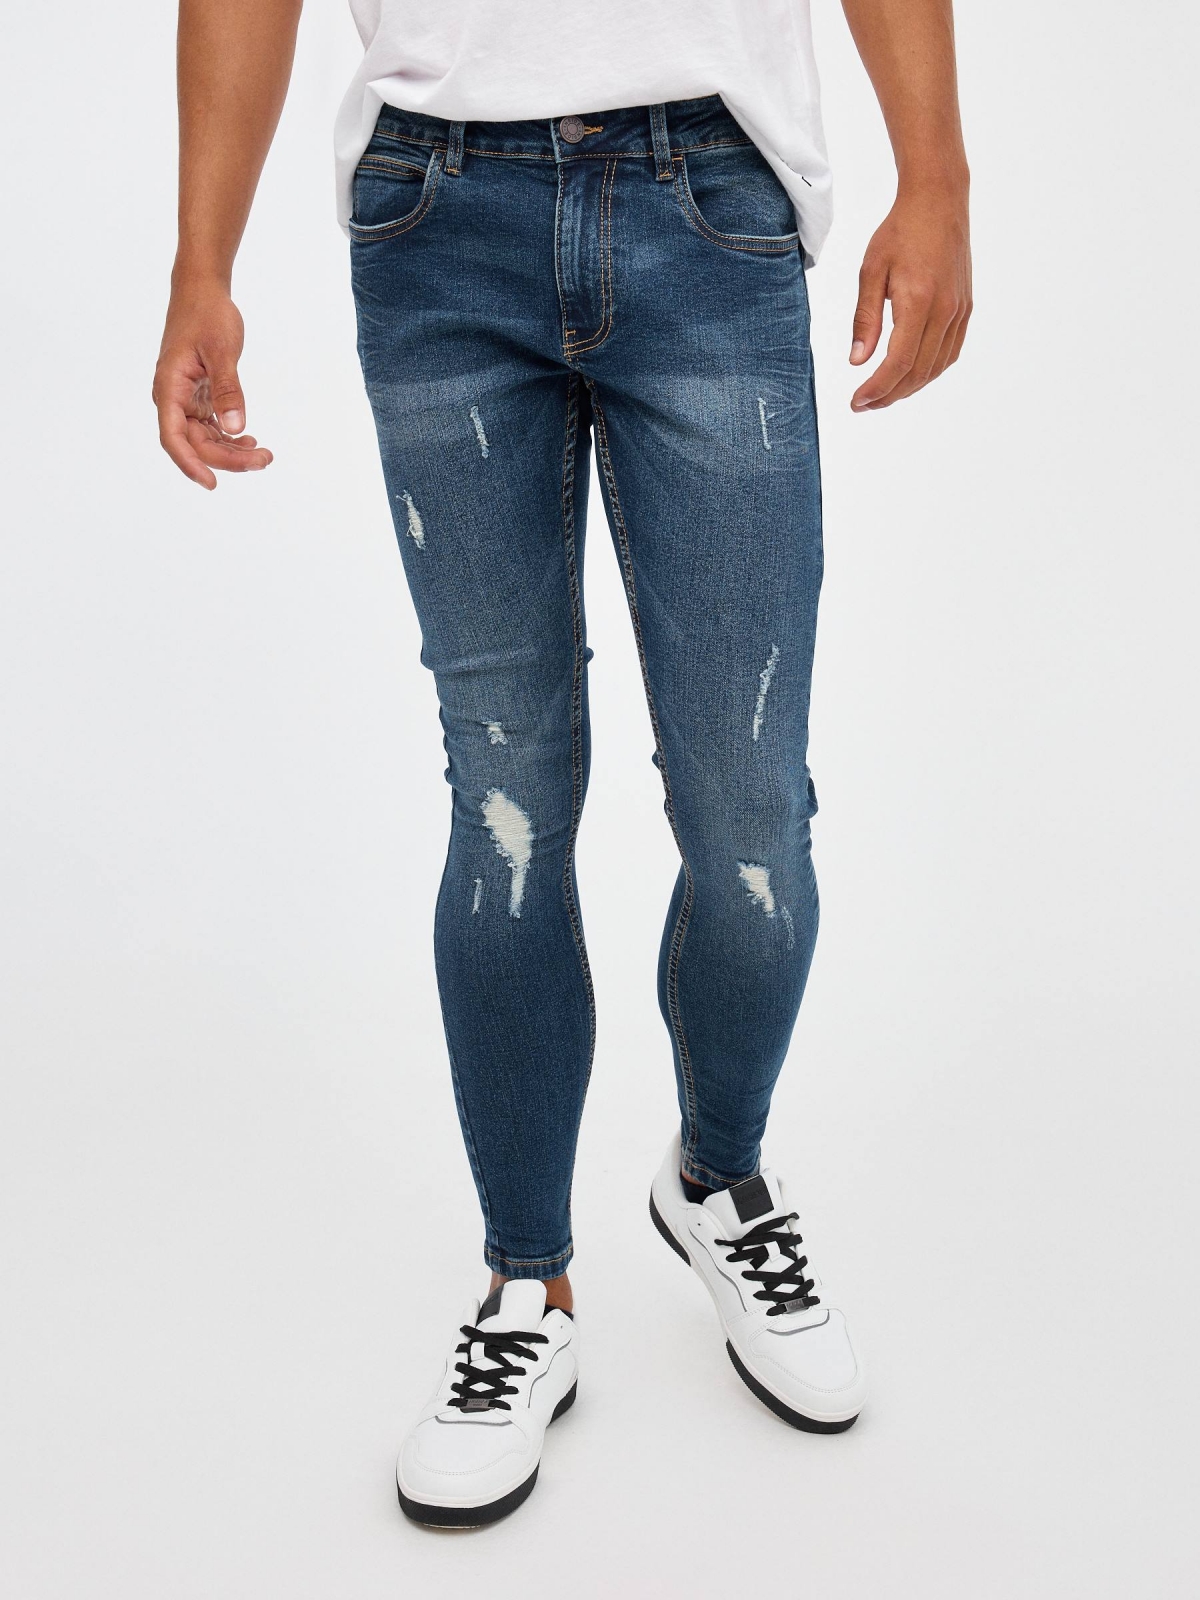 Jeans superskinny de hombre azul marino vista media frontal